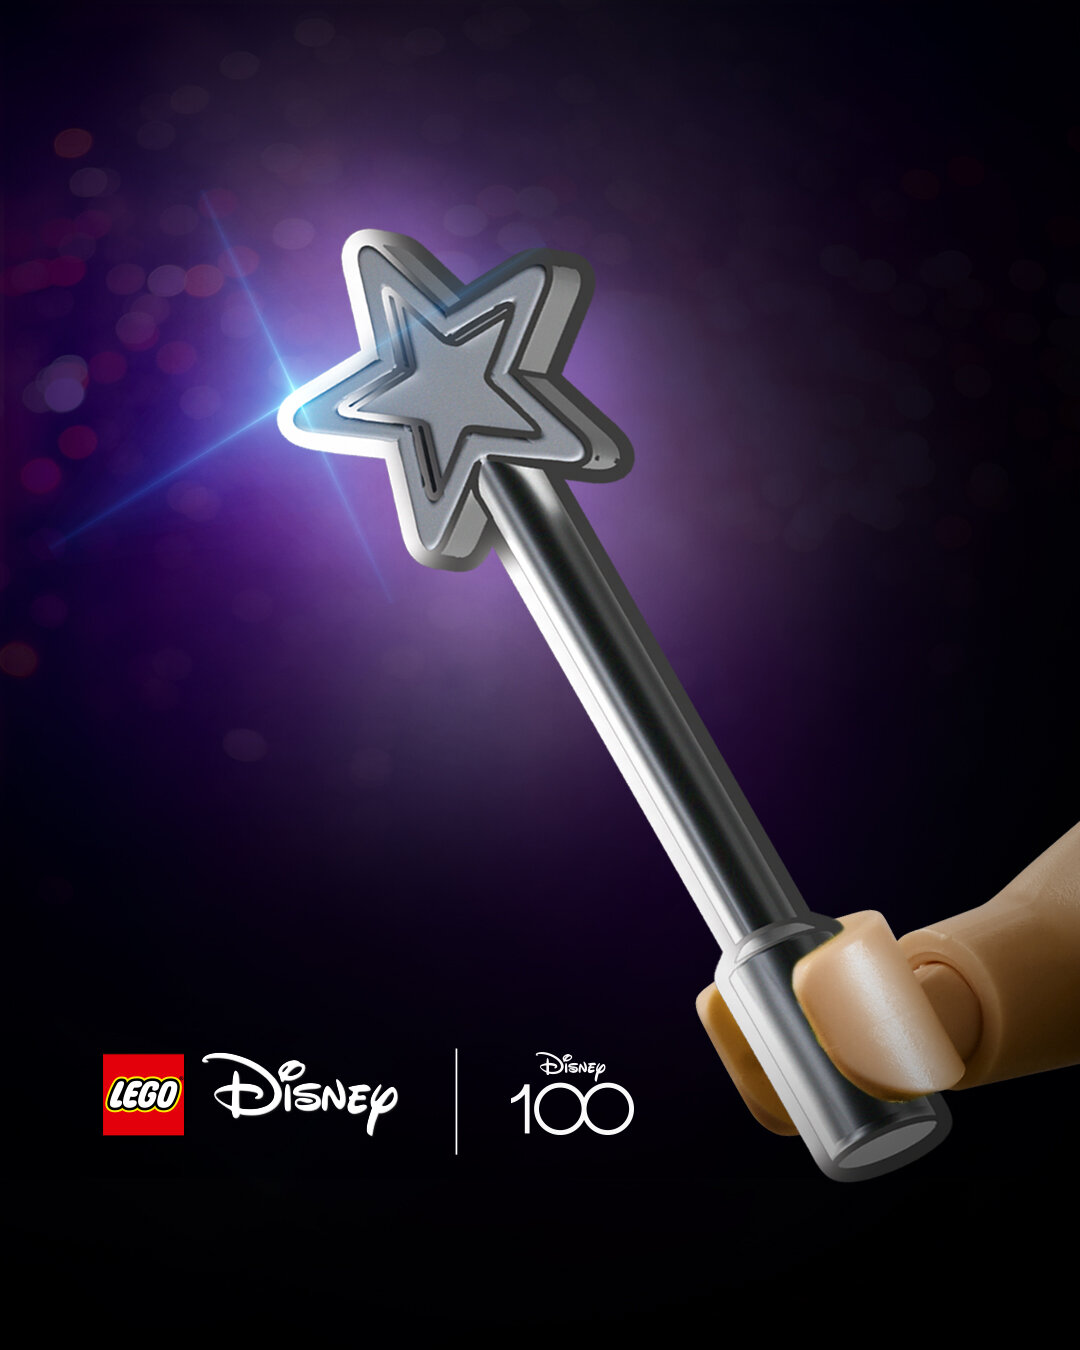 100 ans d'Icone Disney - Lego Disney